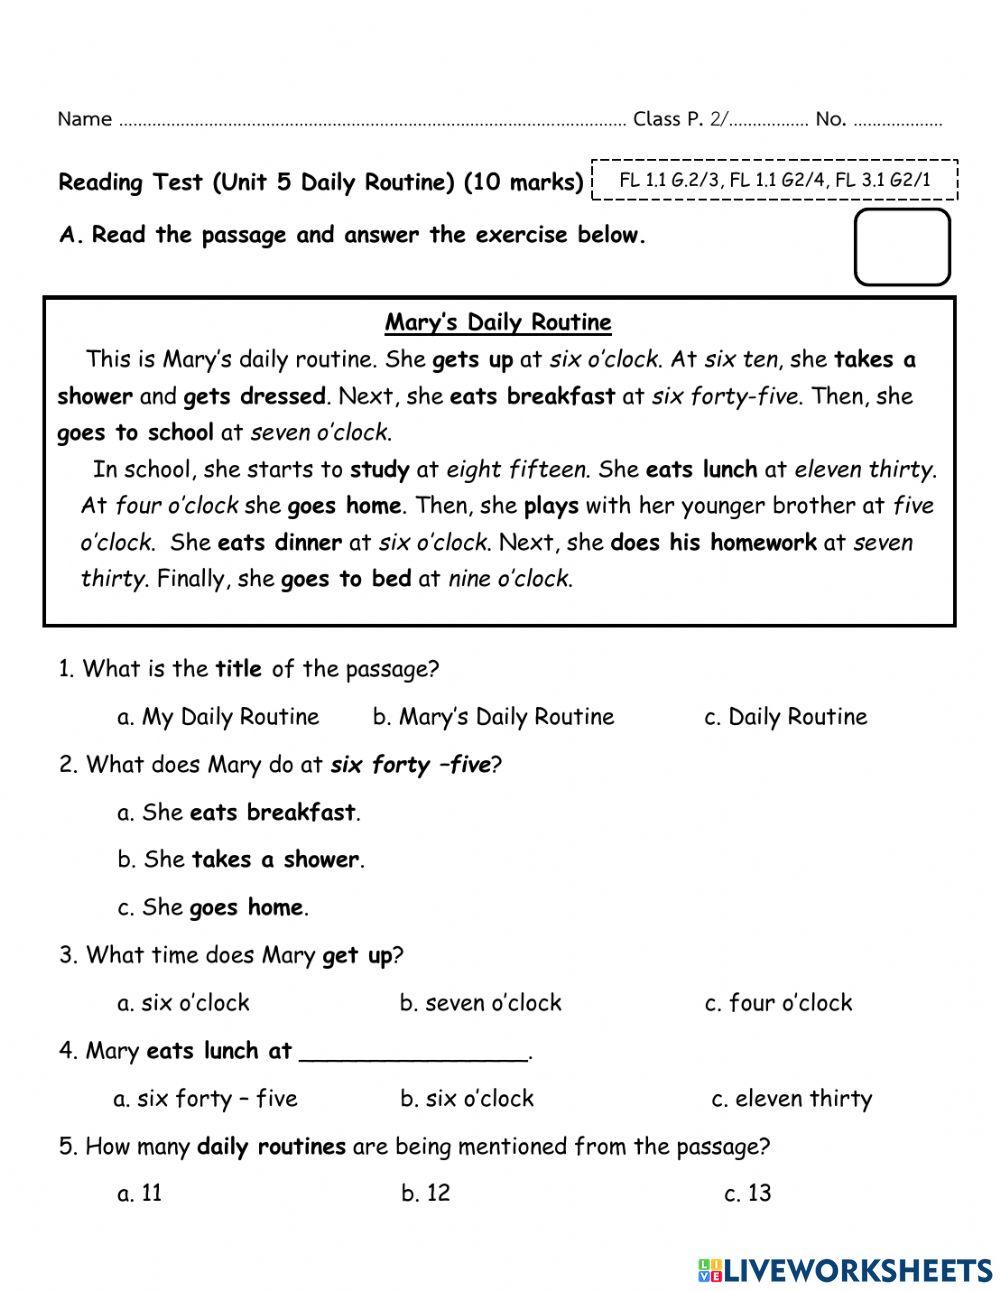 Grade 2 Reading Test unit 5